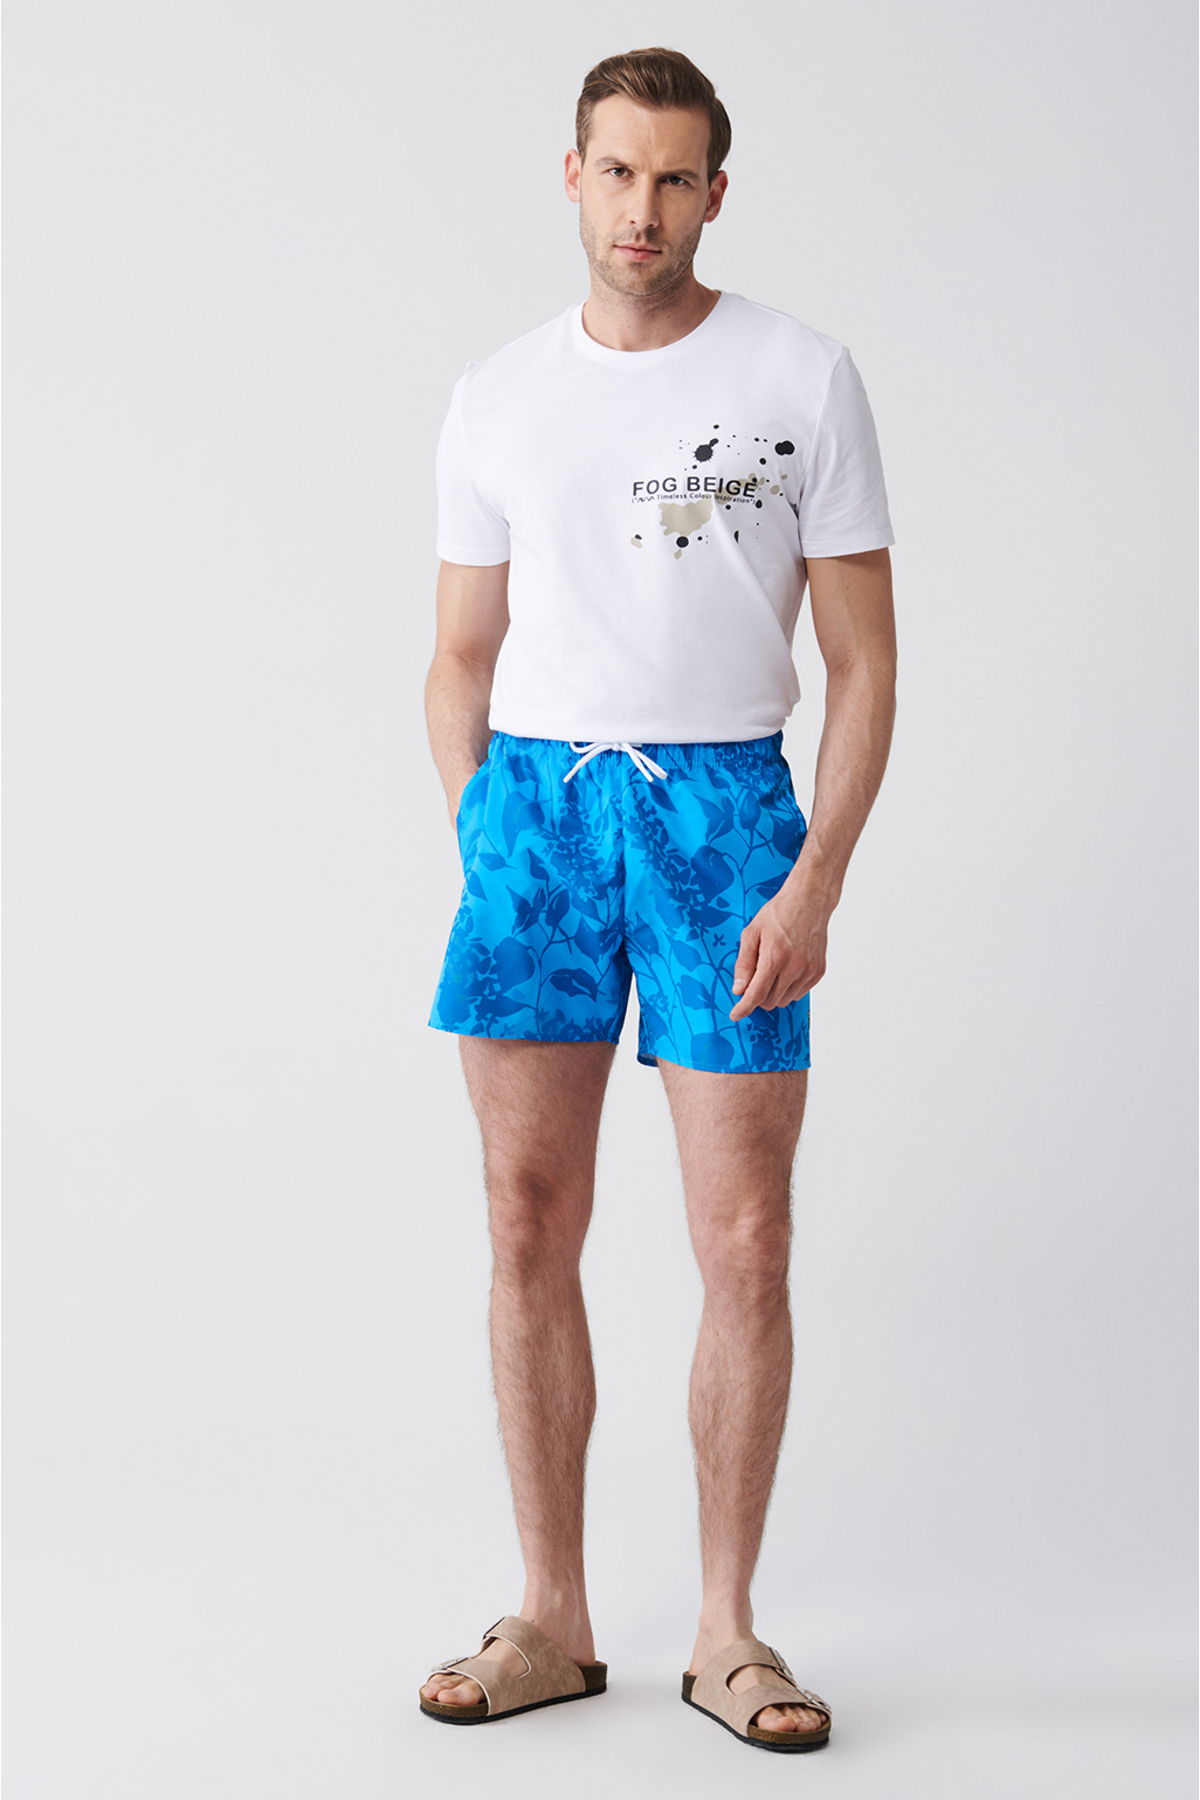 Avva Men's Green-Blue Quick Dry Printed Swimwear in a Standard Size Seafood Shorts